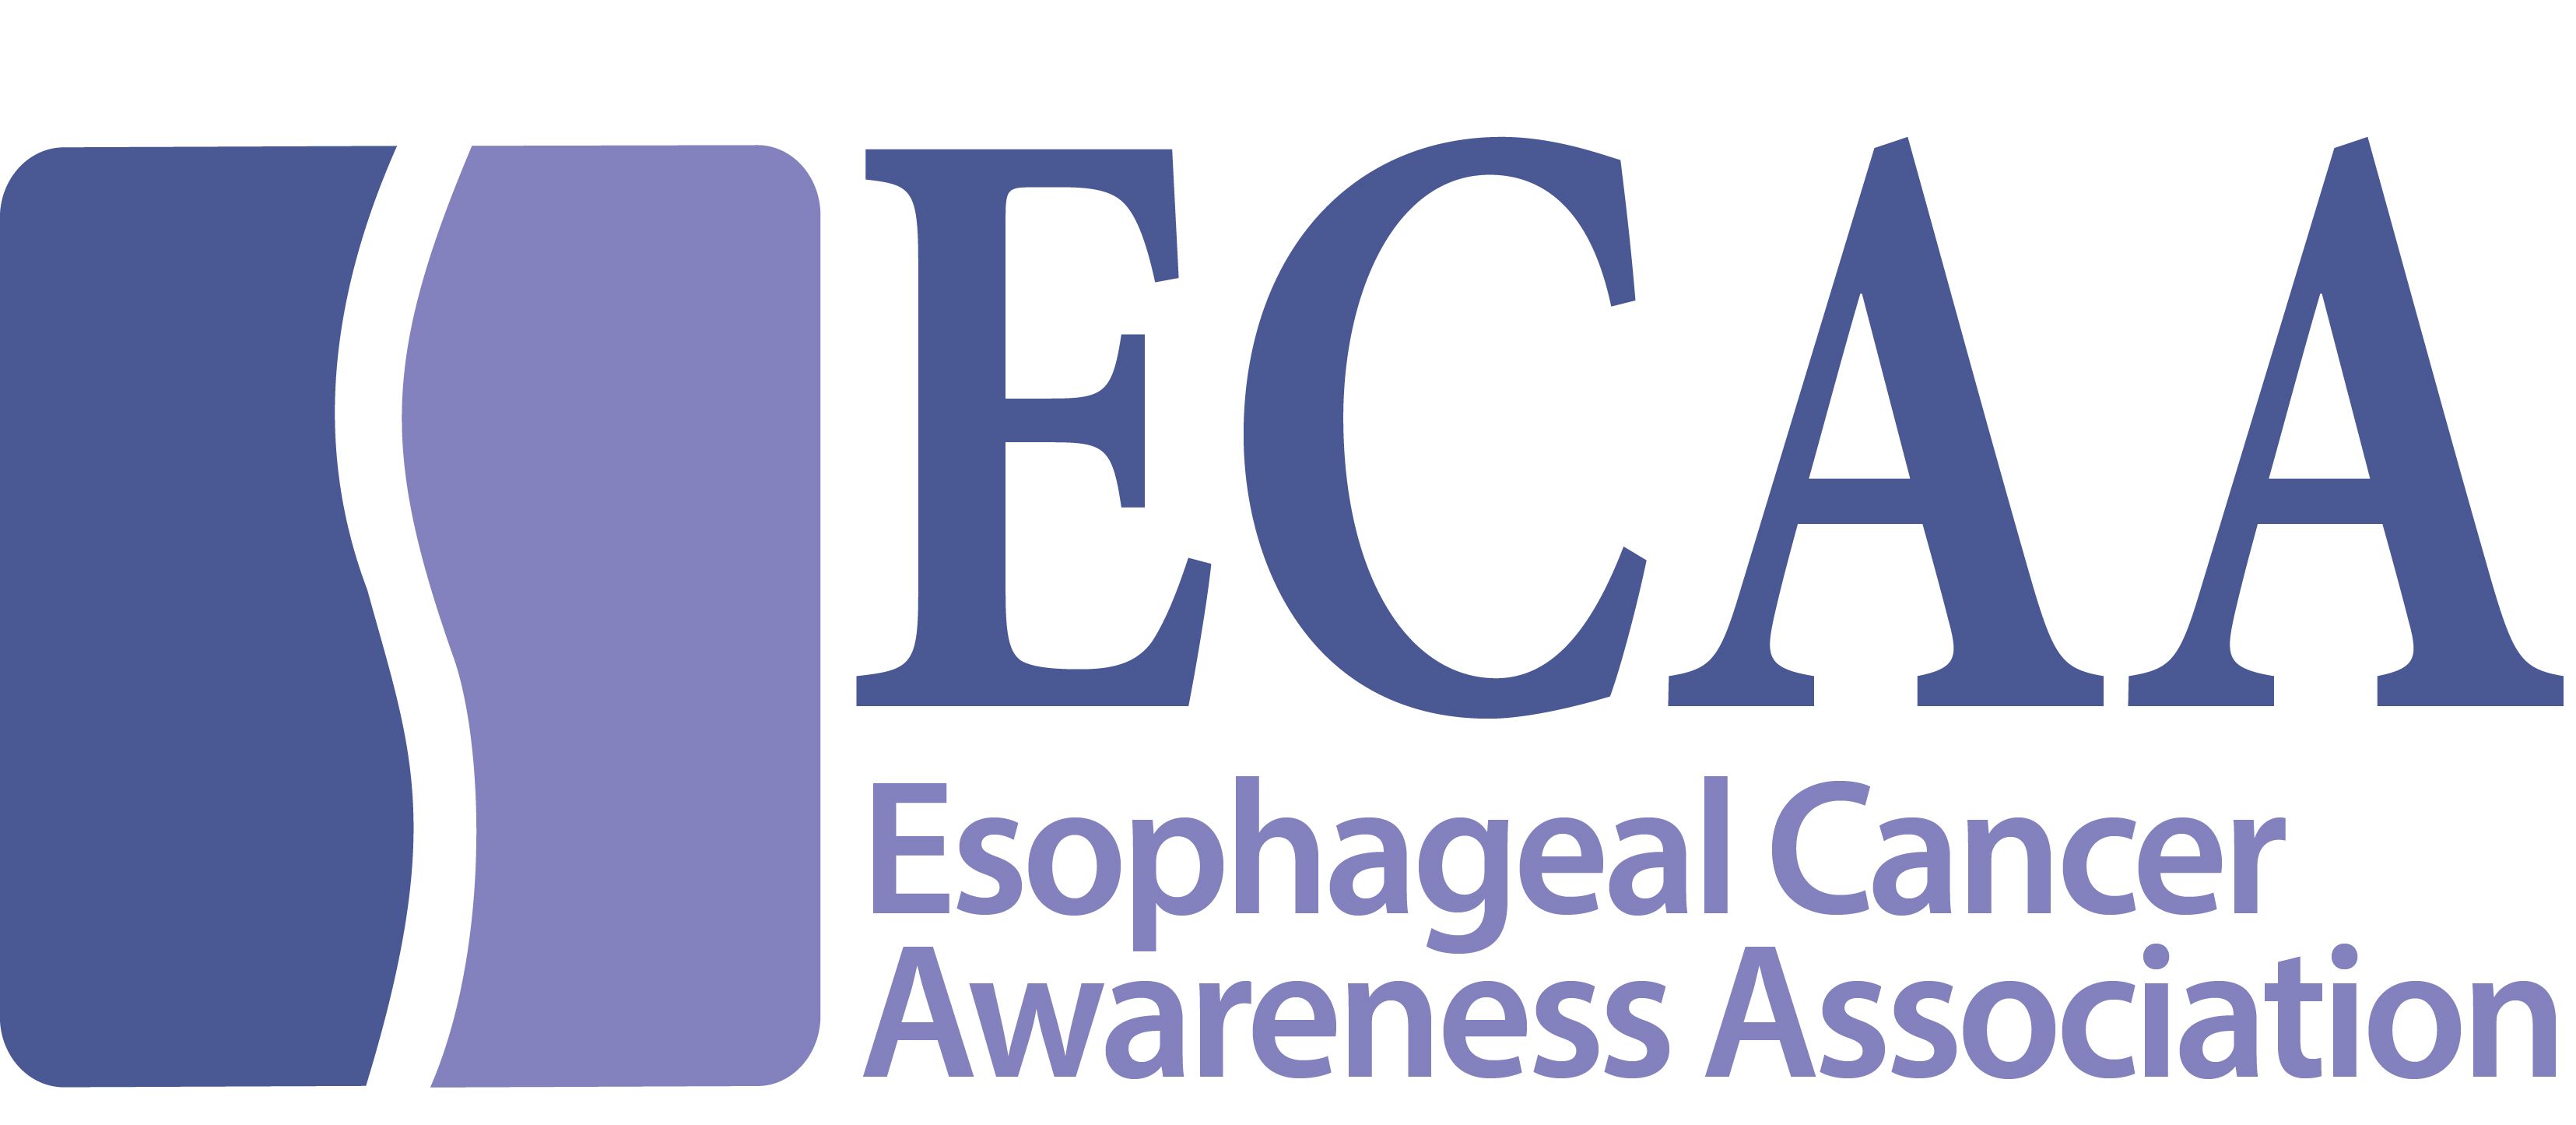 Esophageal Cancer Awareness Association